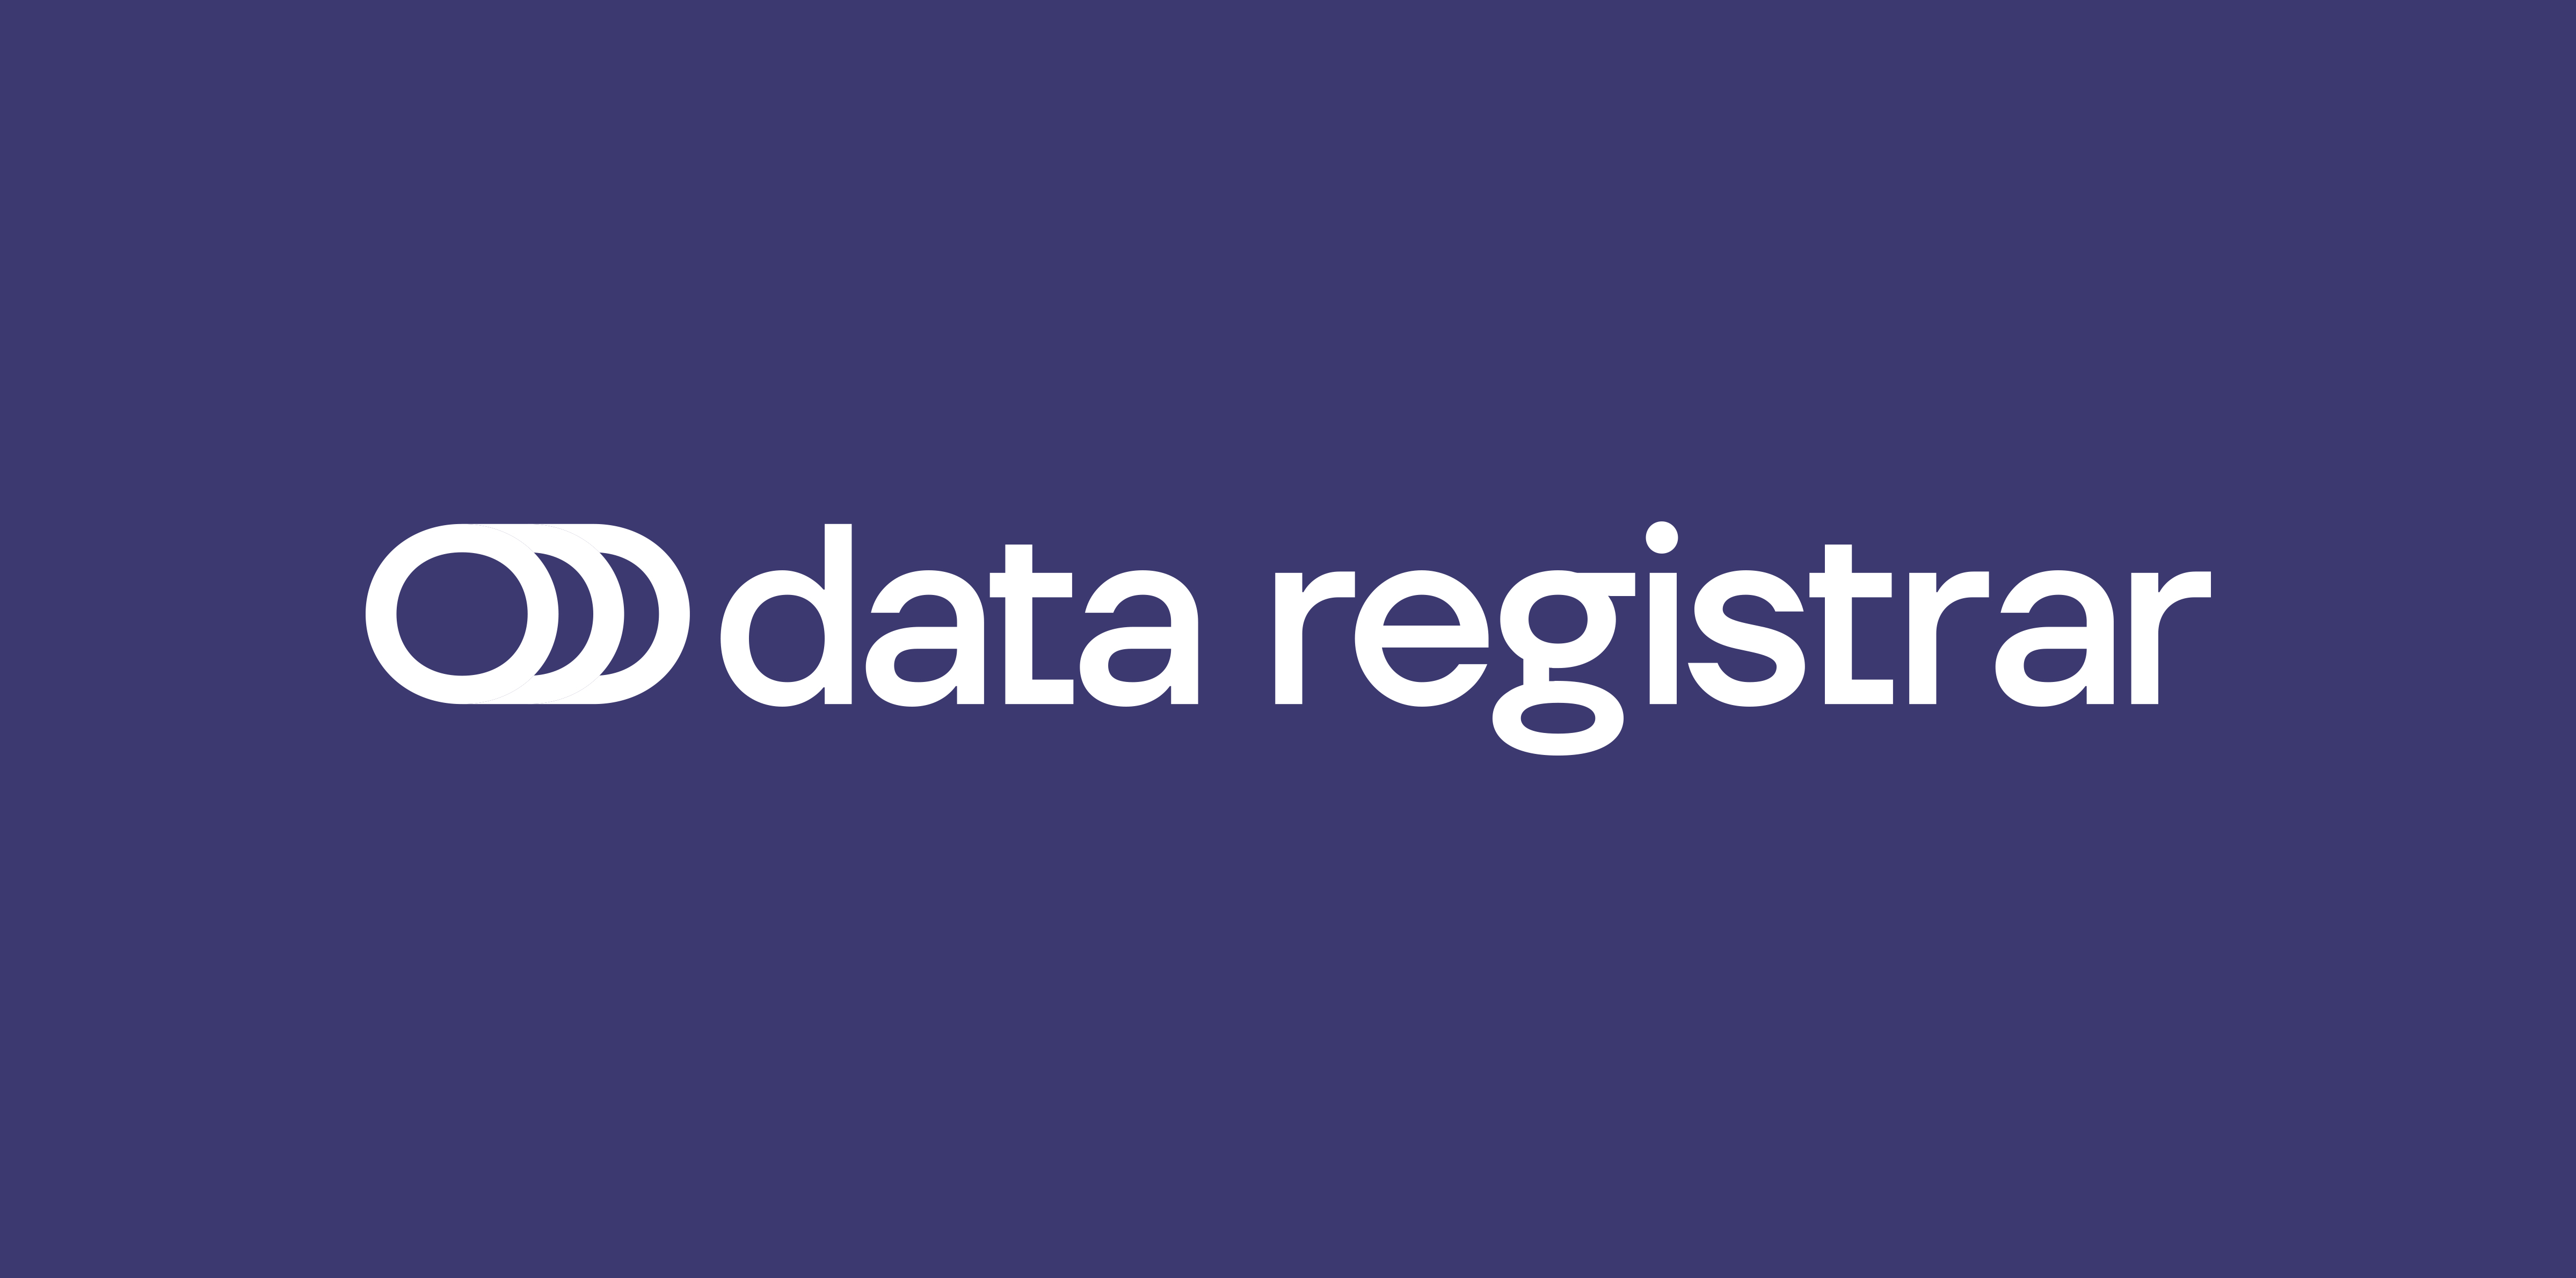 Data-Registrar Logo, Brand ID, Corporate Identity, Brochure 4